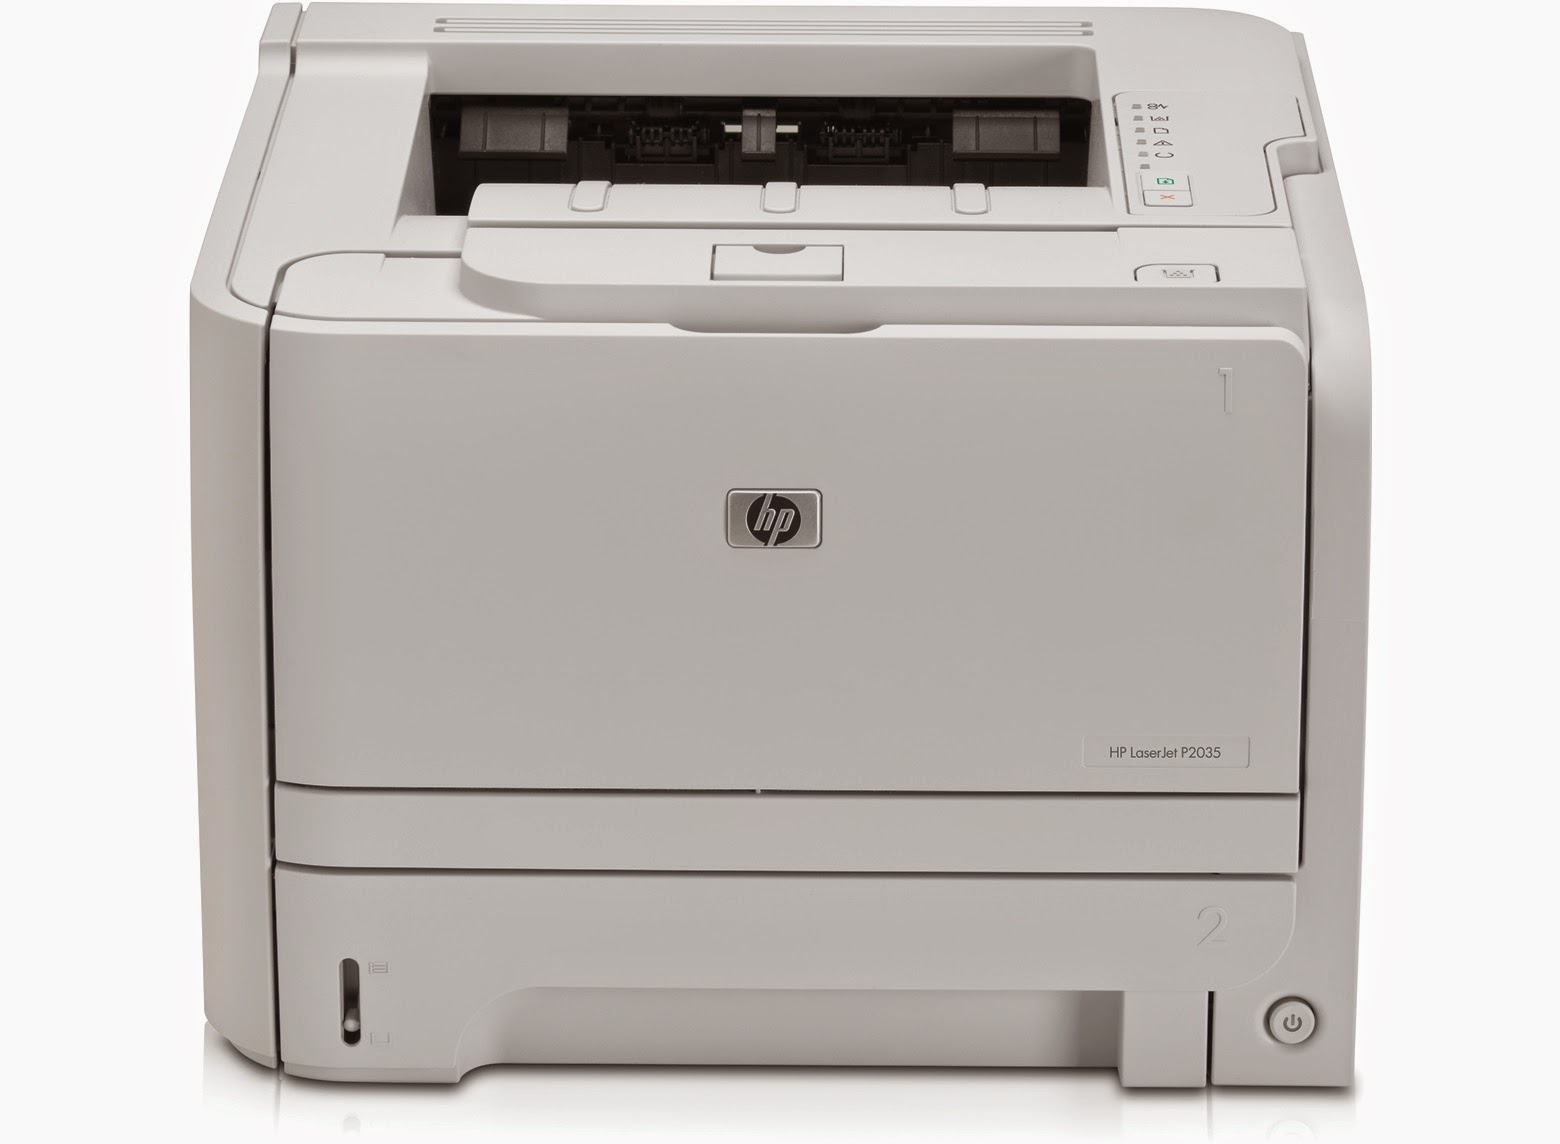 Descargar HP Laserjet P2035 Driver Impresora Gratis ...